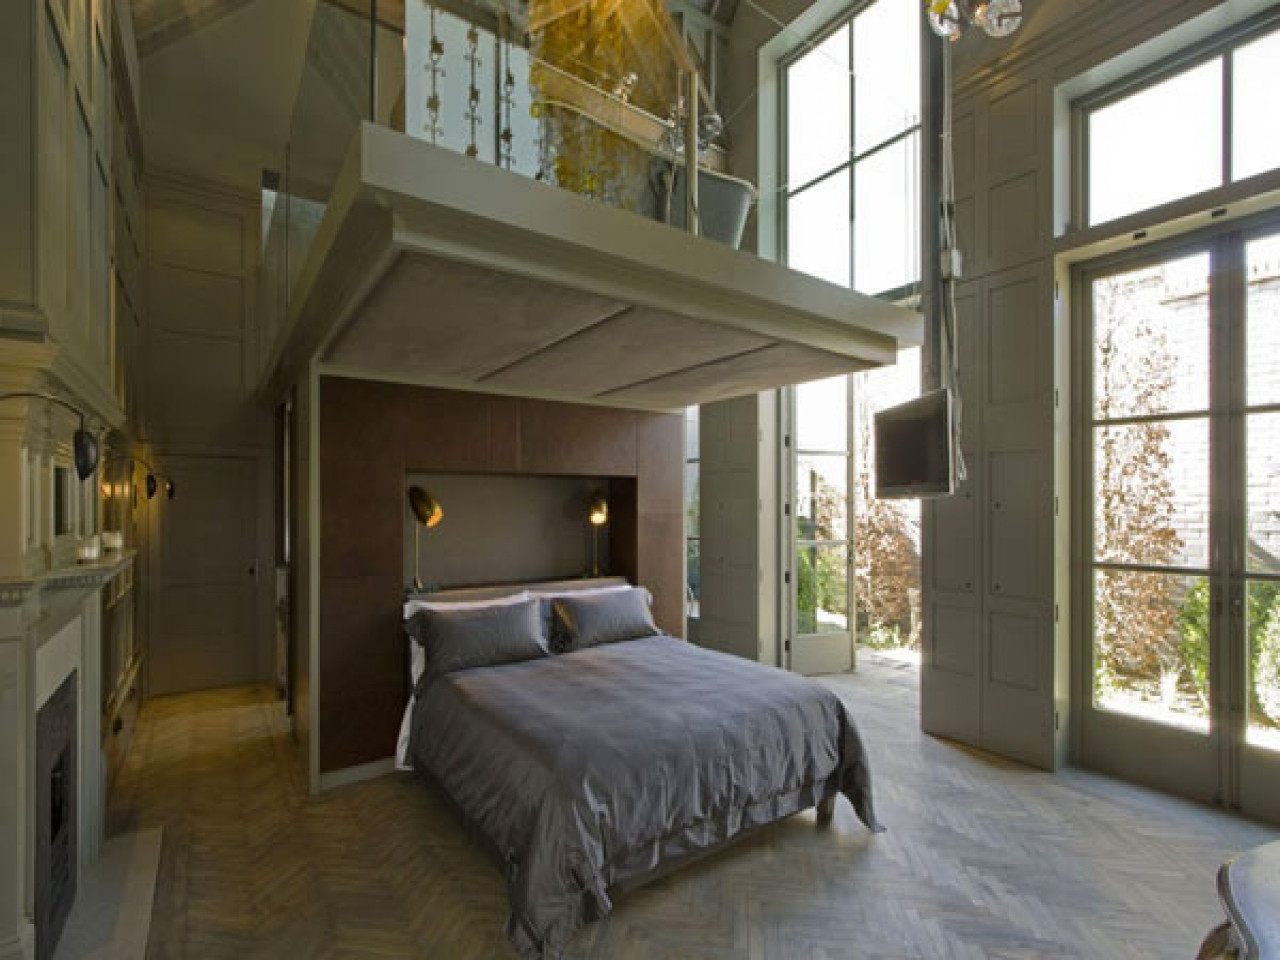 Loft Master Bedroom
 Master suite design ideas master suite bedroom with loft